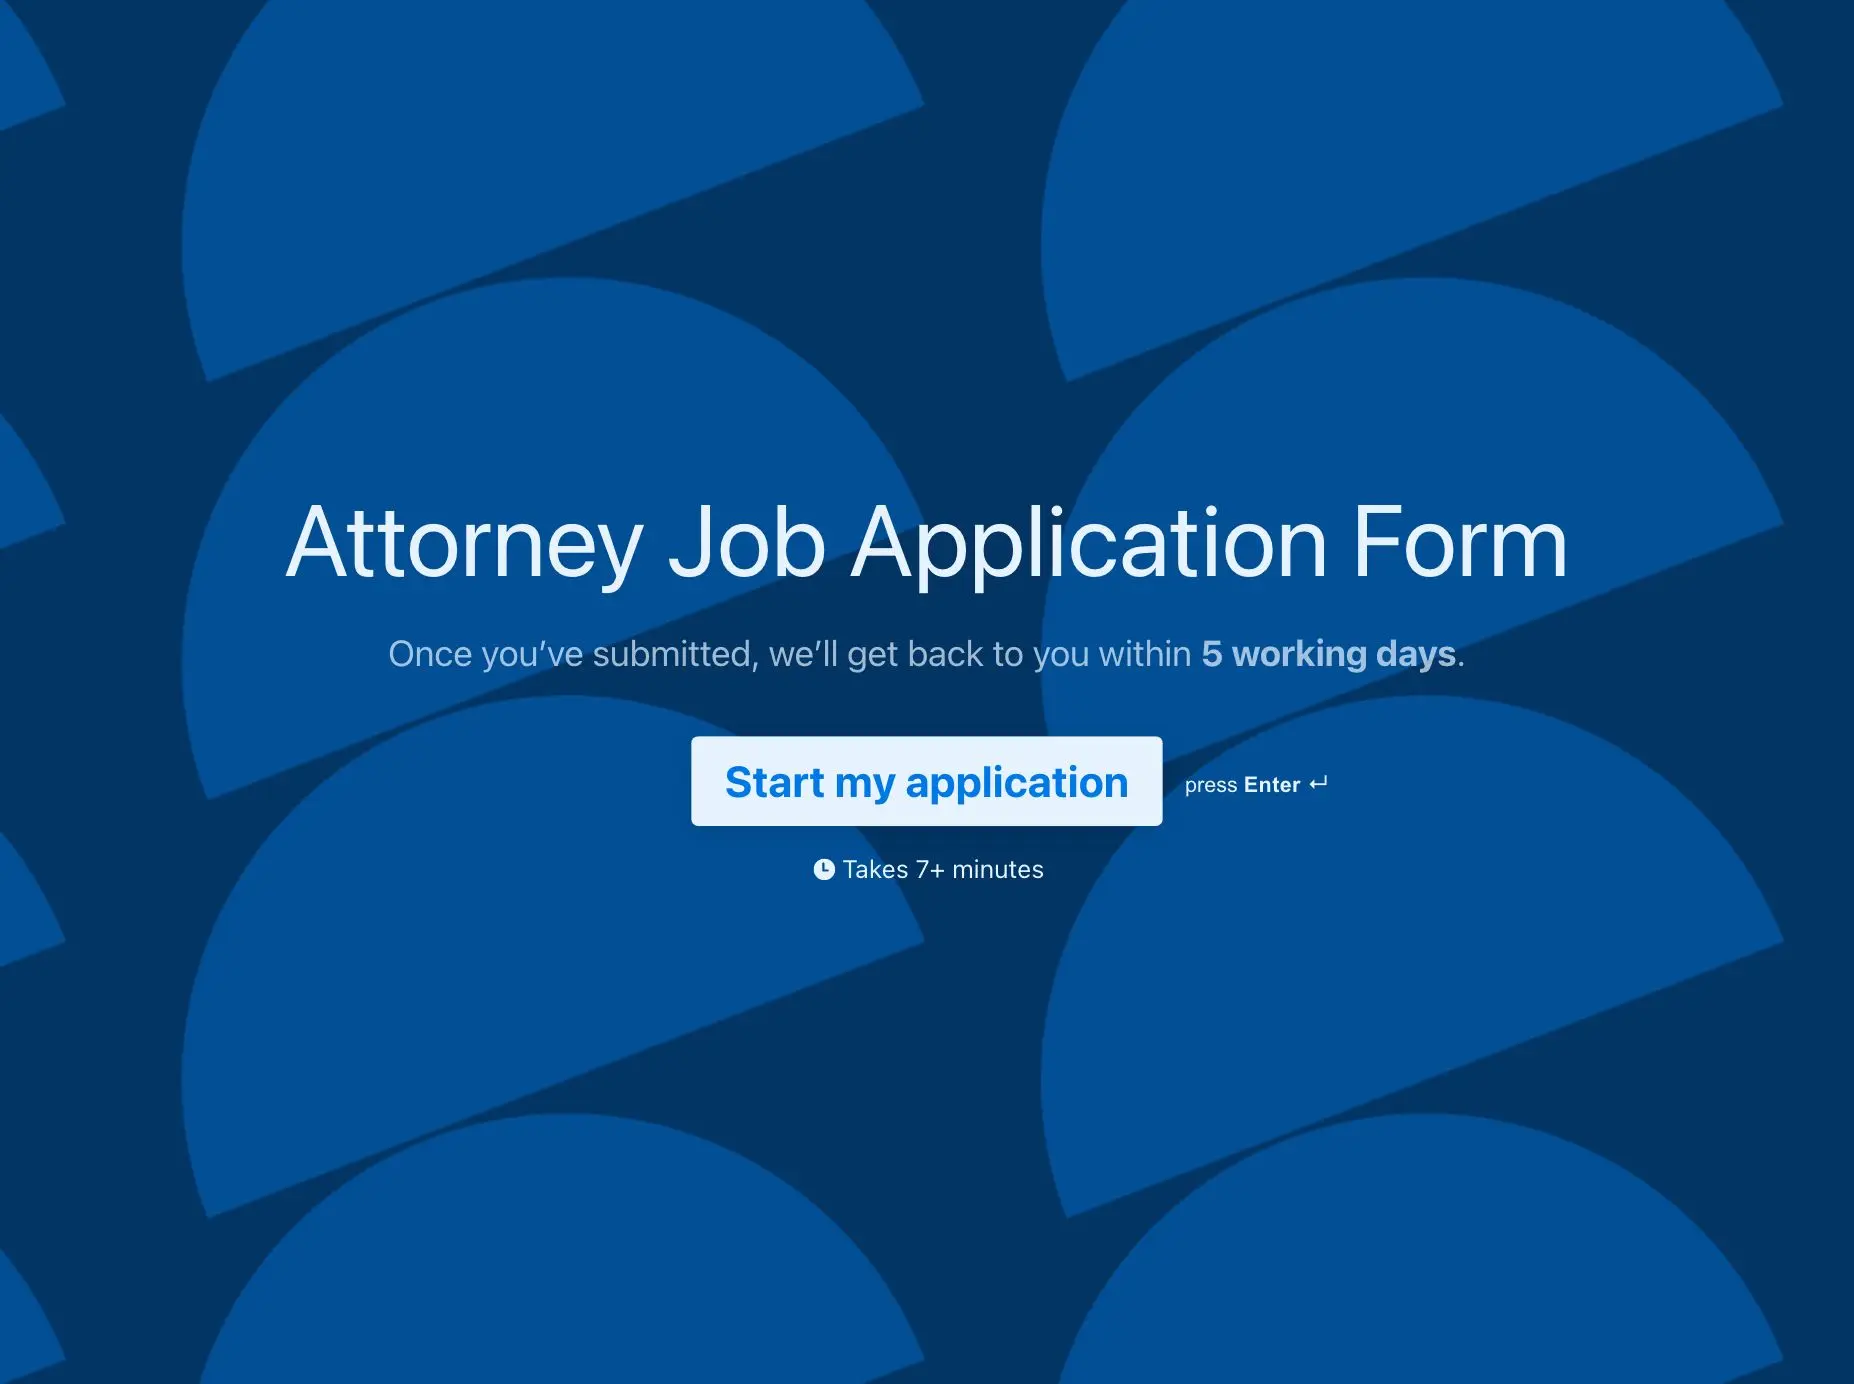 Attorney Job Application Form Template Hero